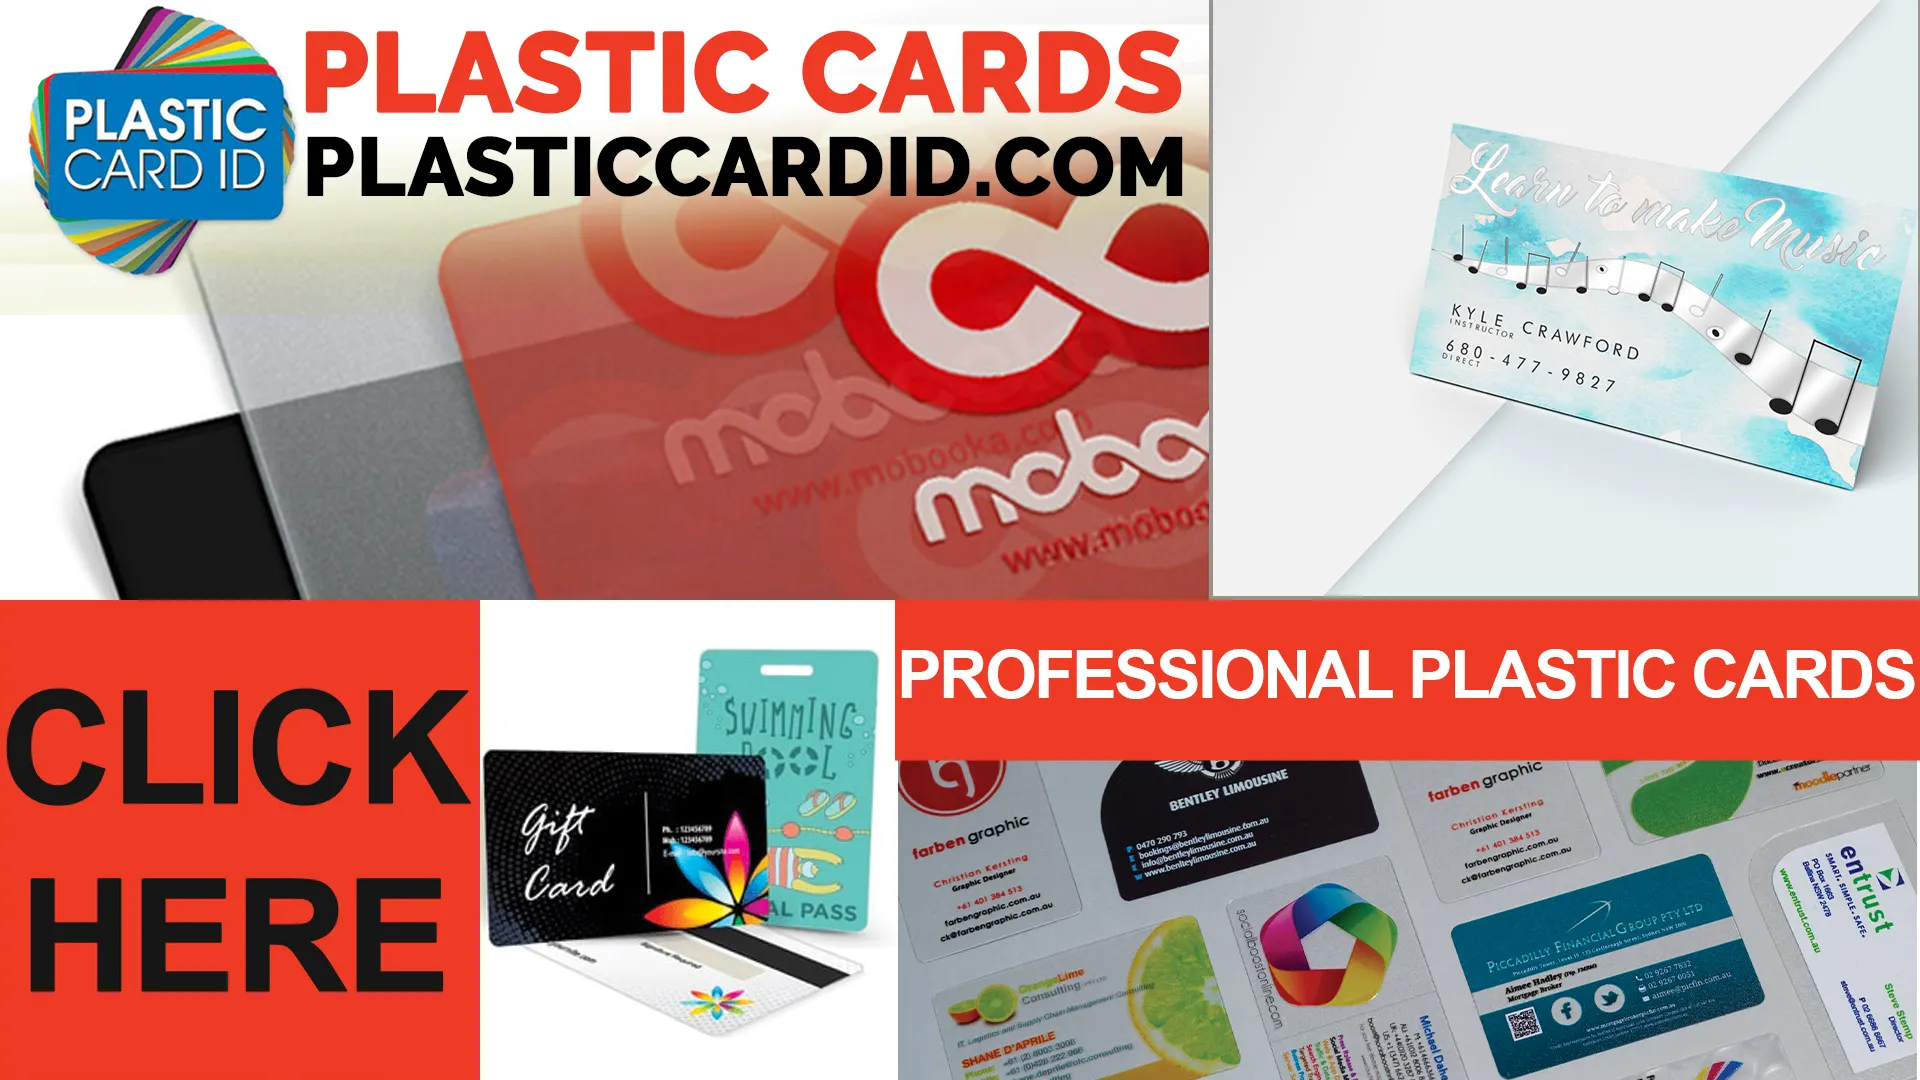  Customizing Card Security for Your Needs 